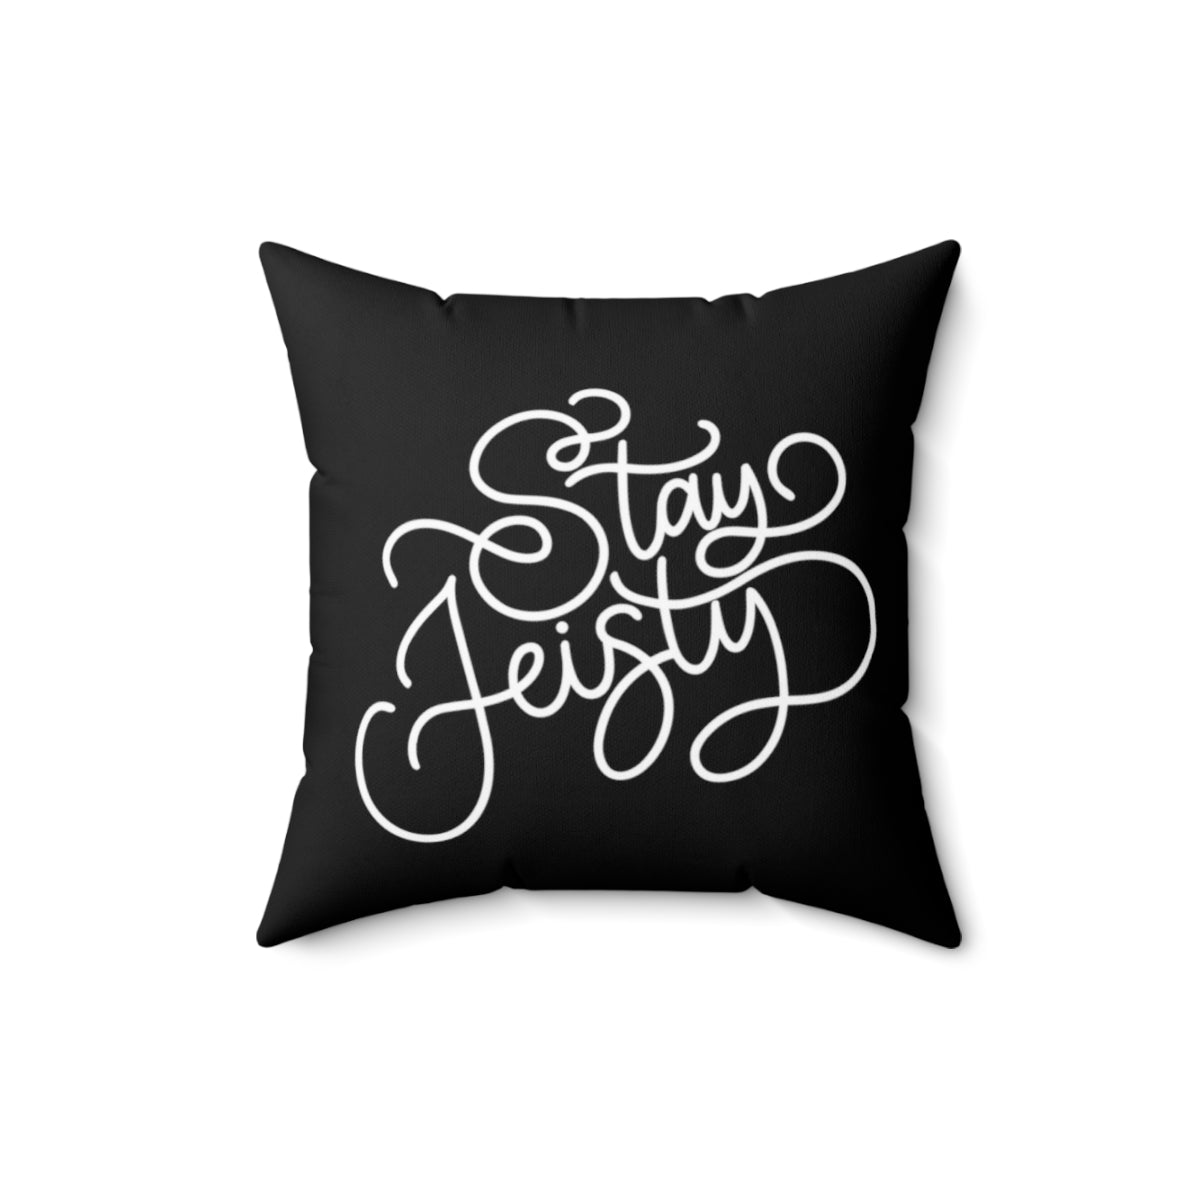 Stay Feisty (Black) - Pillow